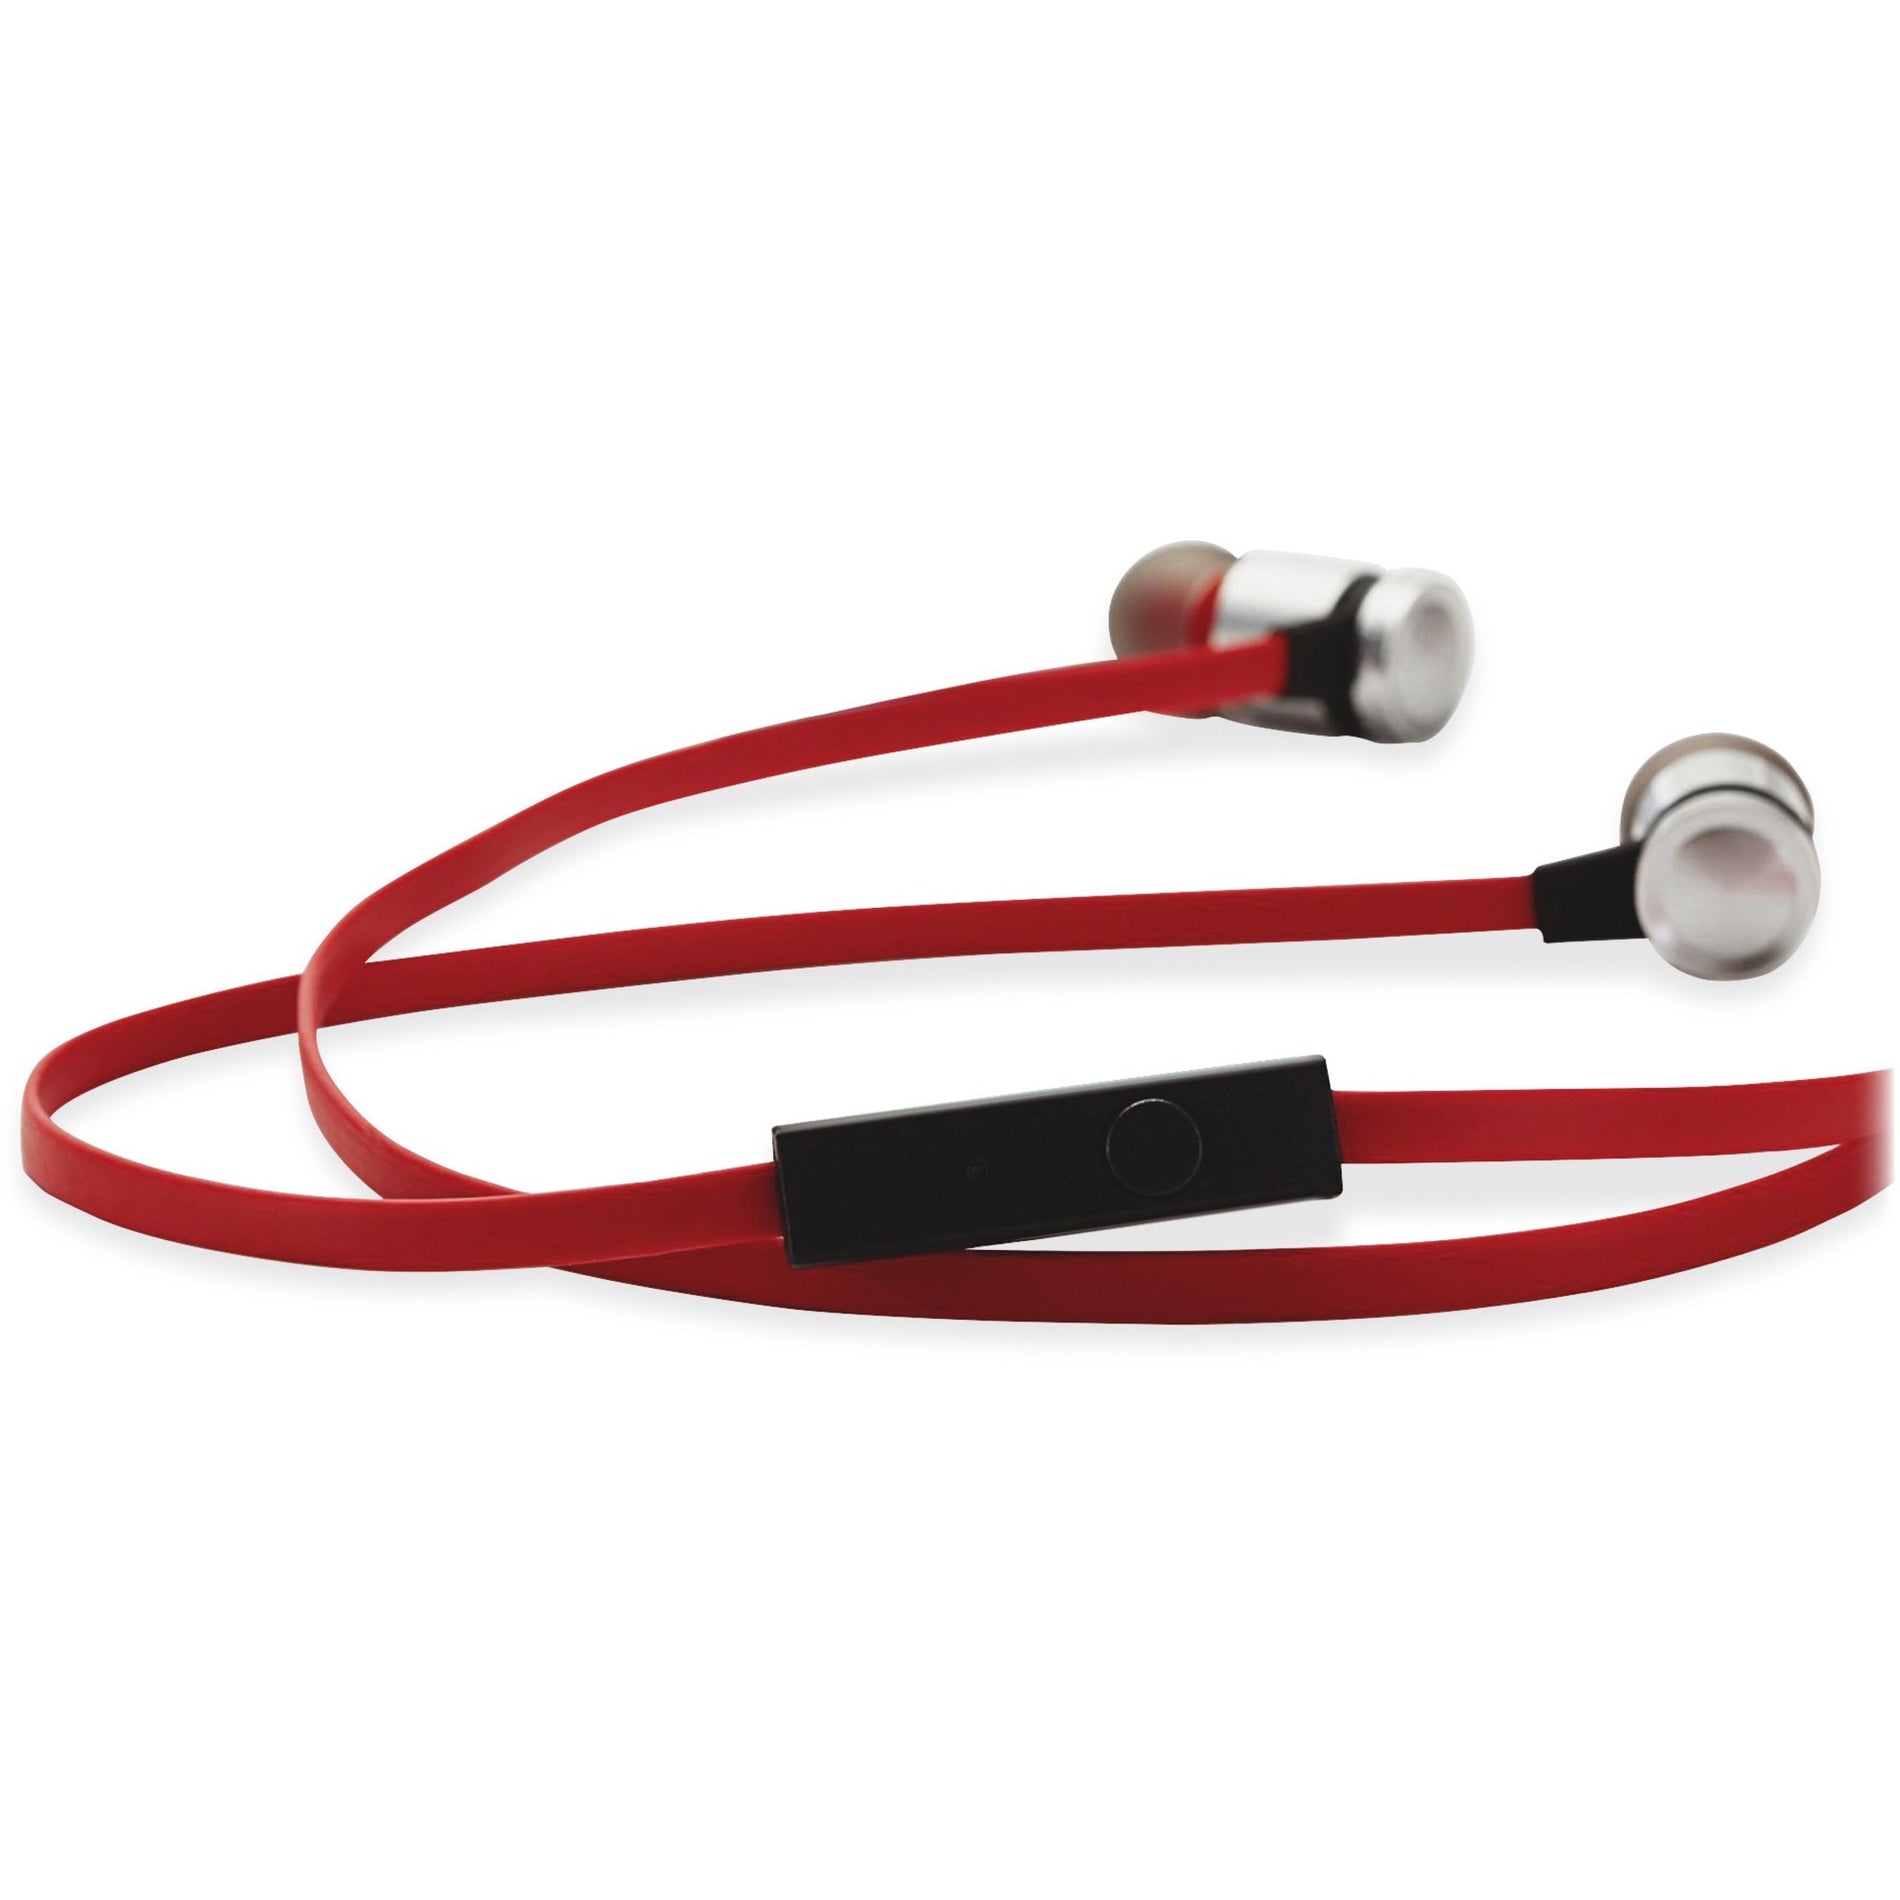 Verbatim 99210 Listen / Talk Earphones, Red/Silver, In-line Remote, Comfortable, Tangle-free Cable